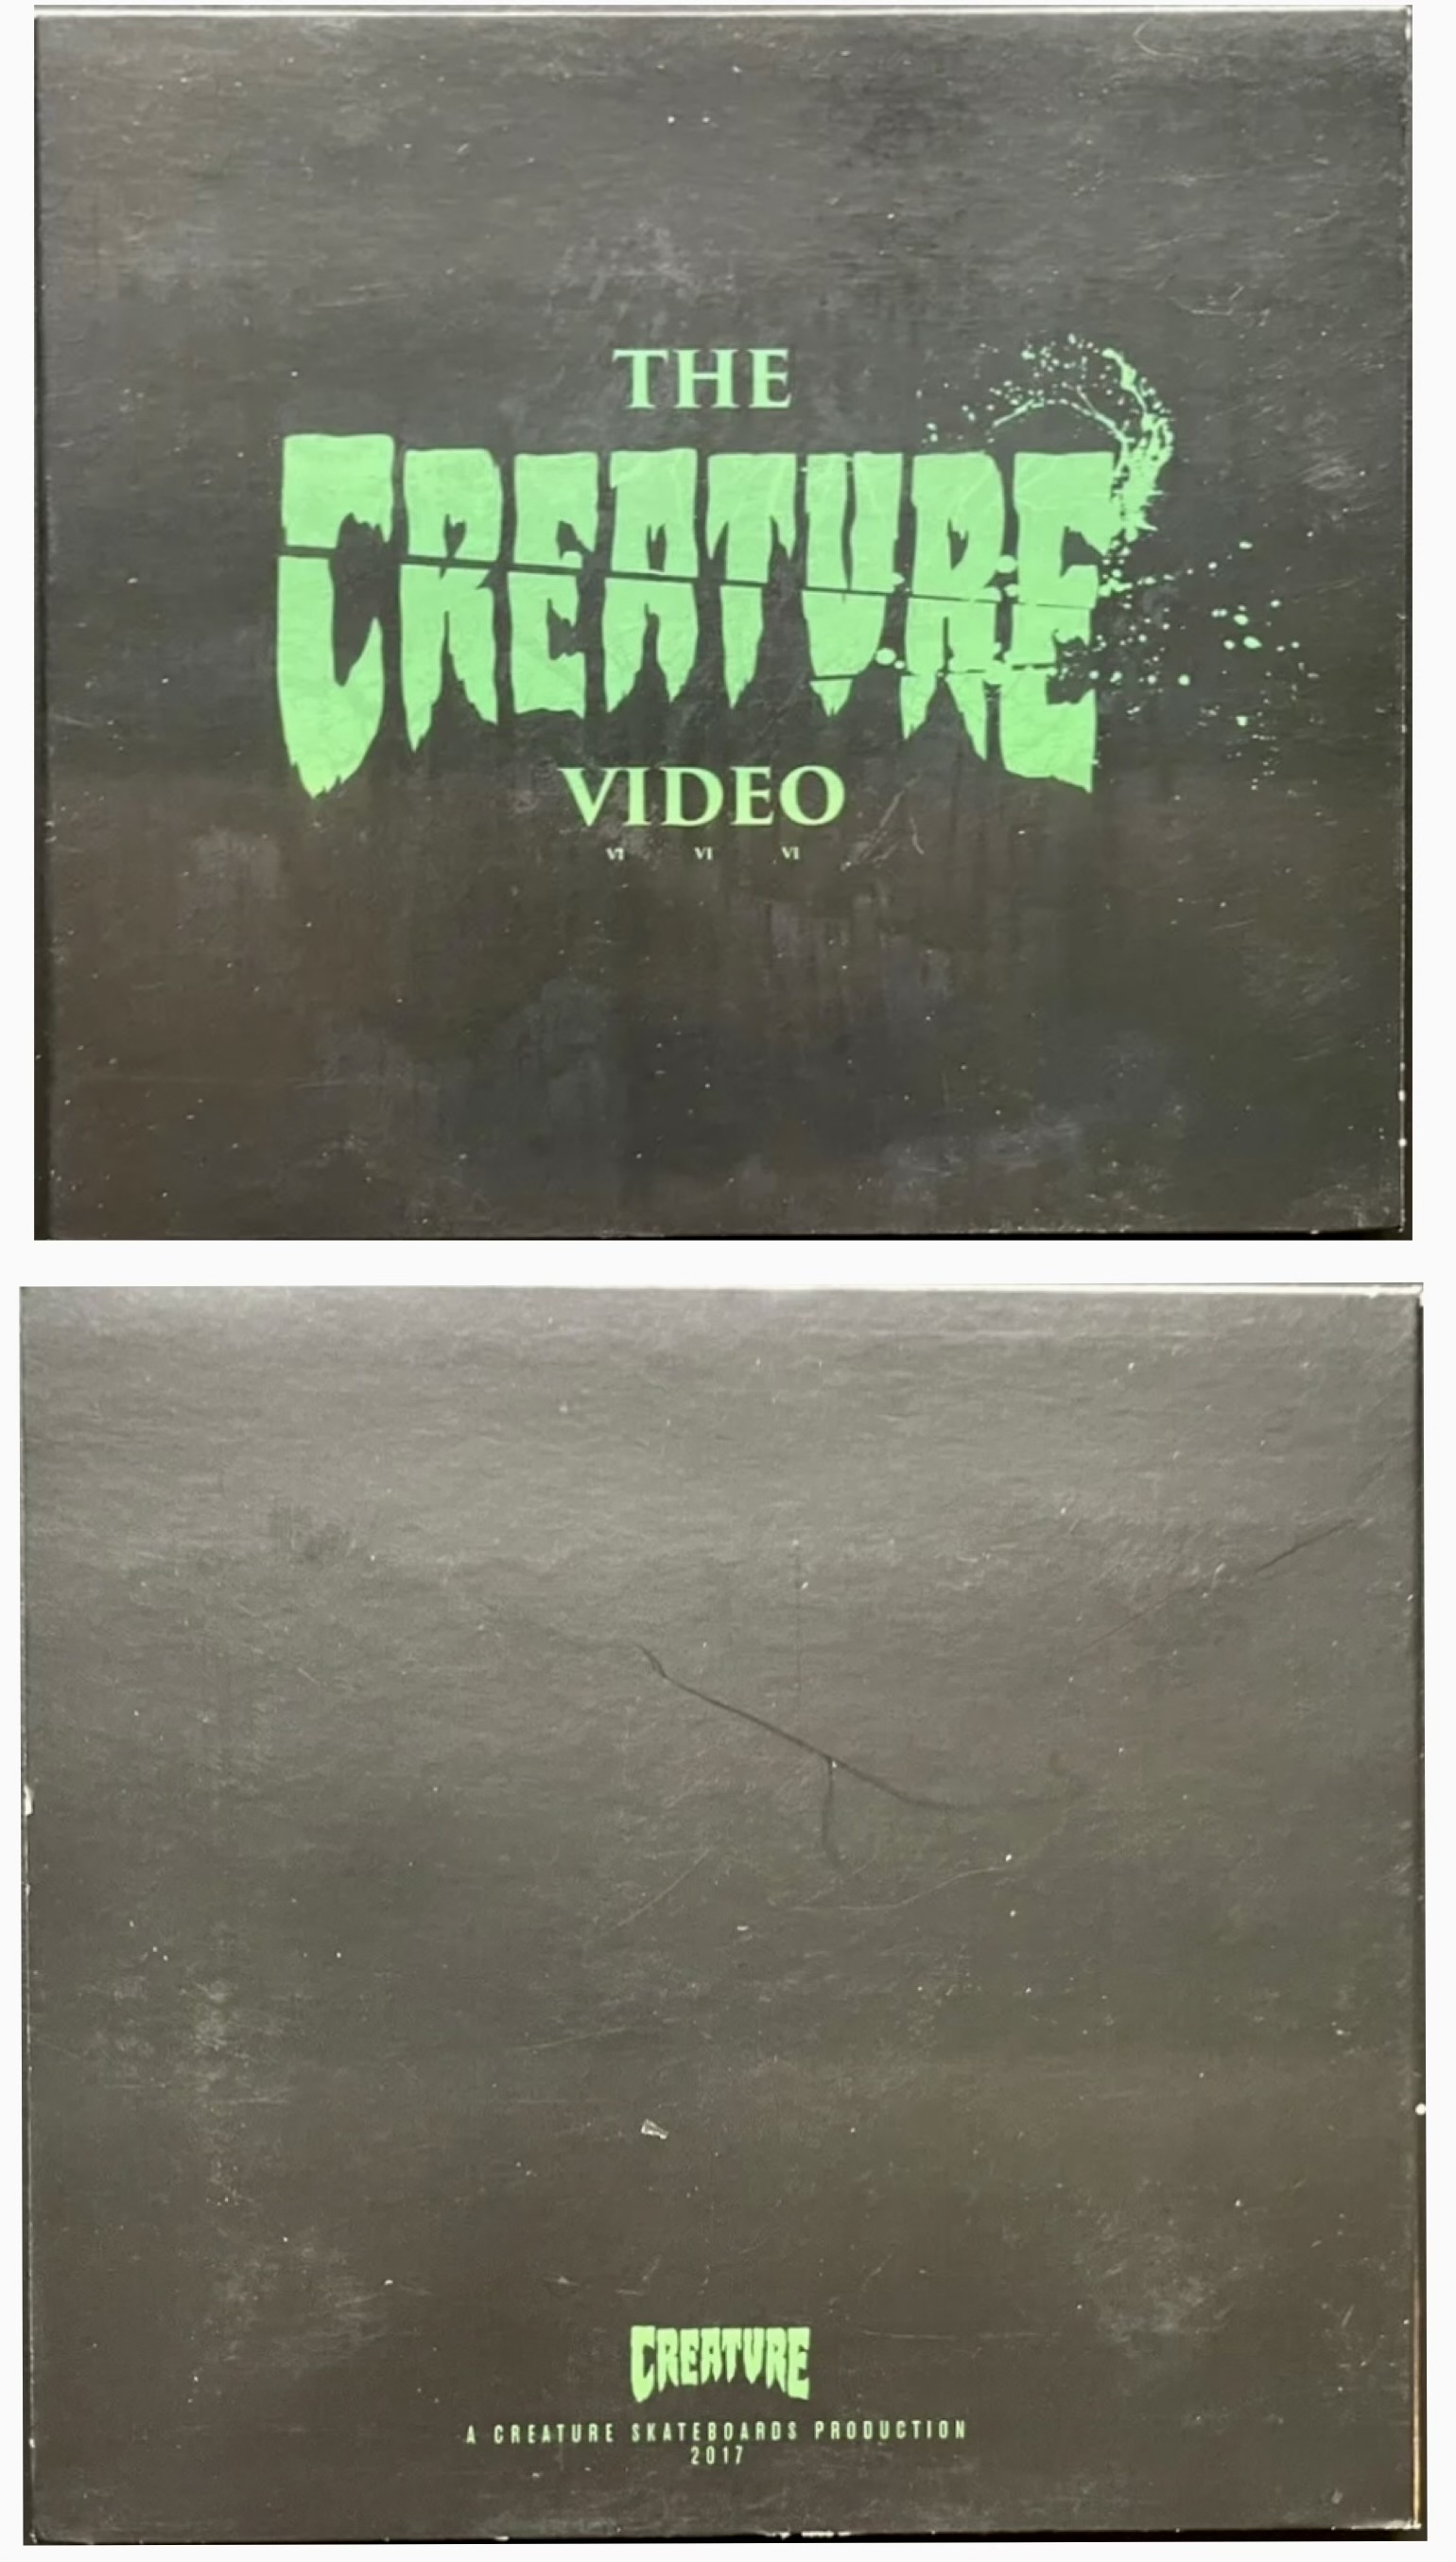 Creature - The Creature Video cover